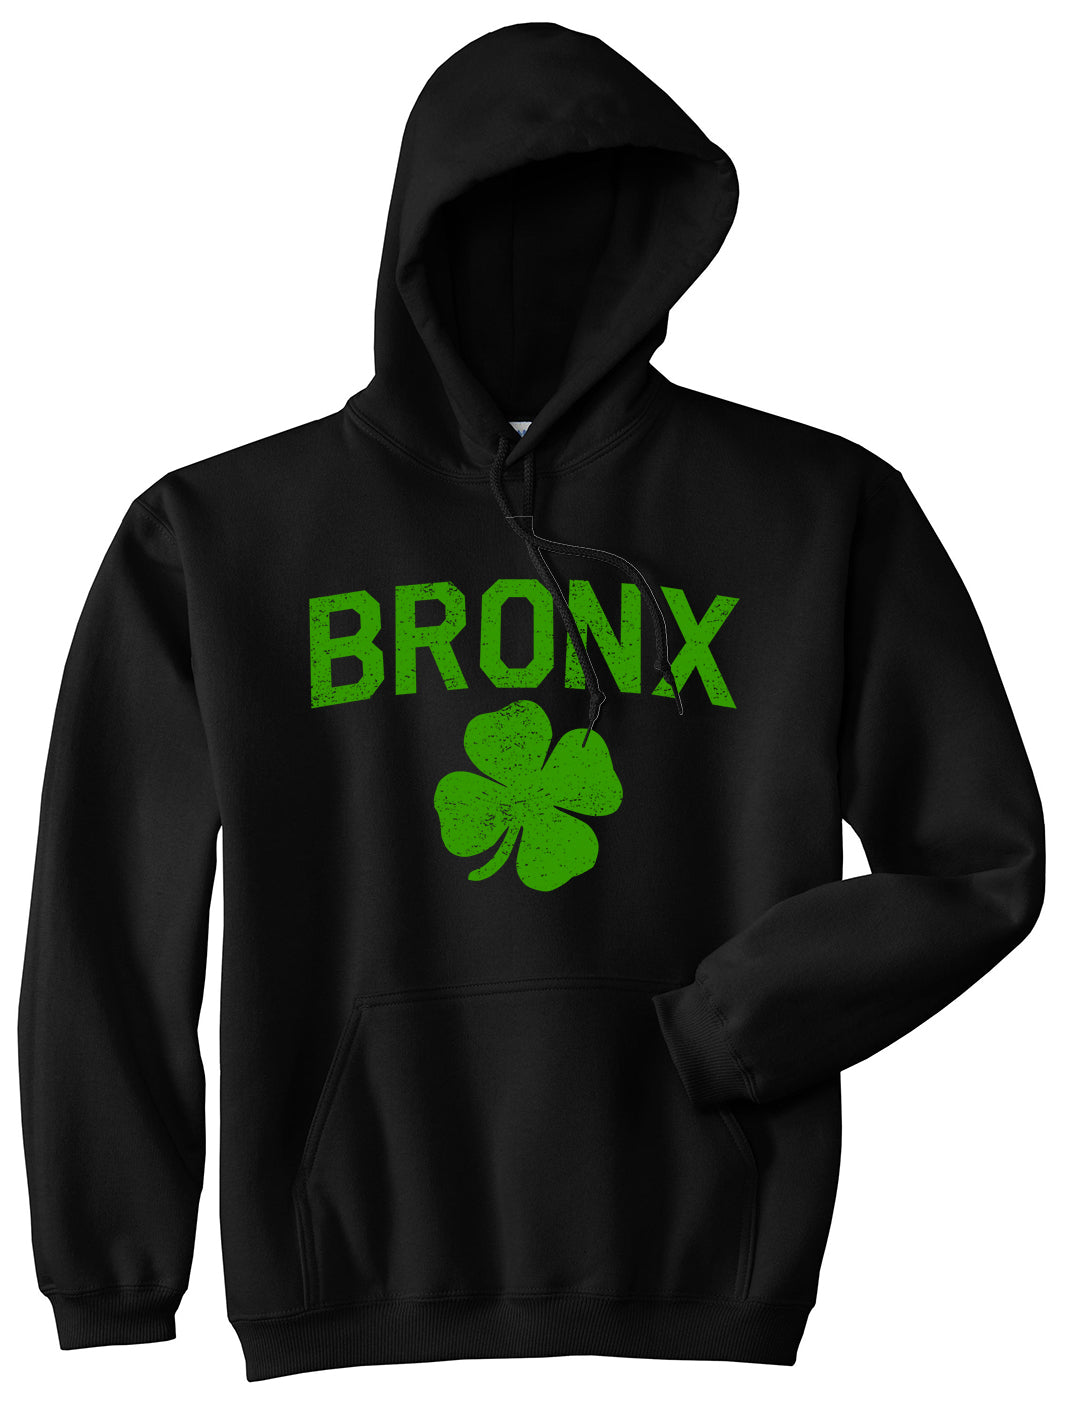 The Bronx Irish St Patricks Day Mens Pullover Hoodie Black